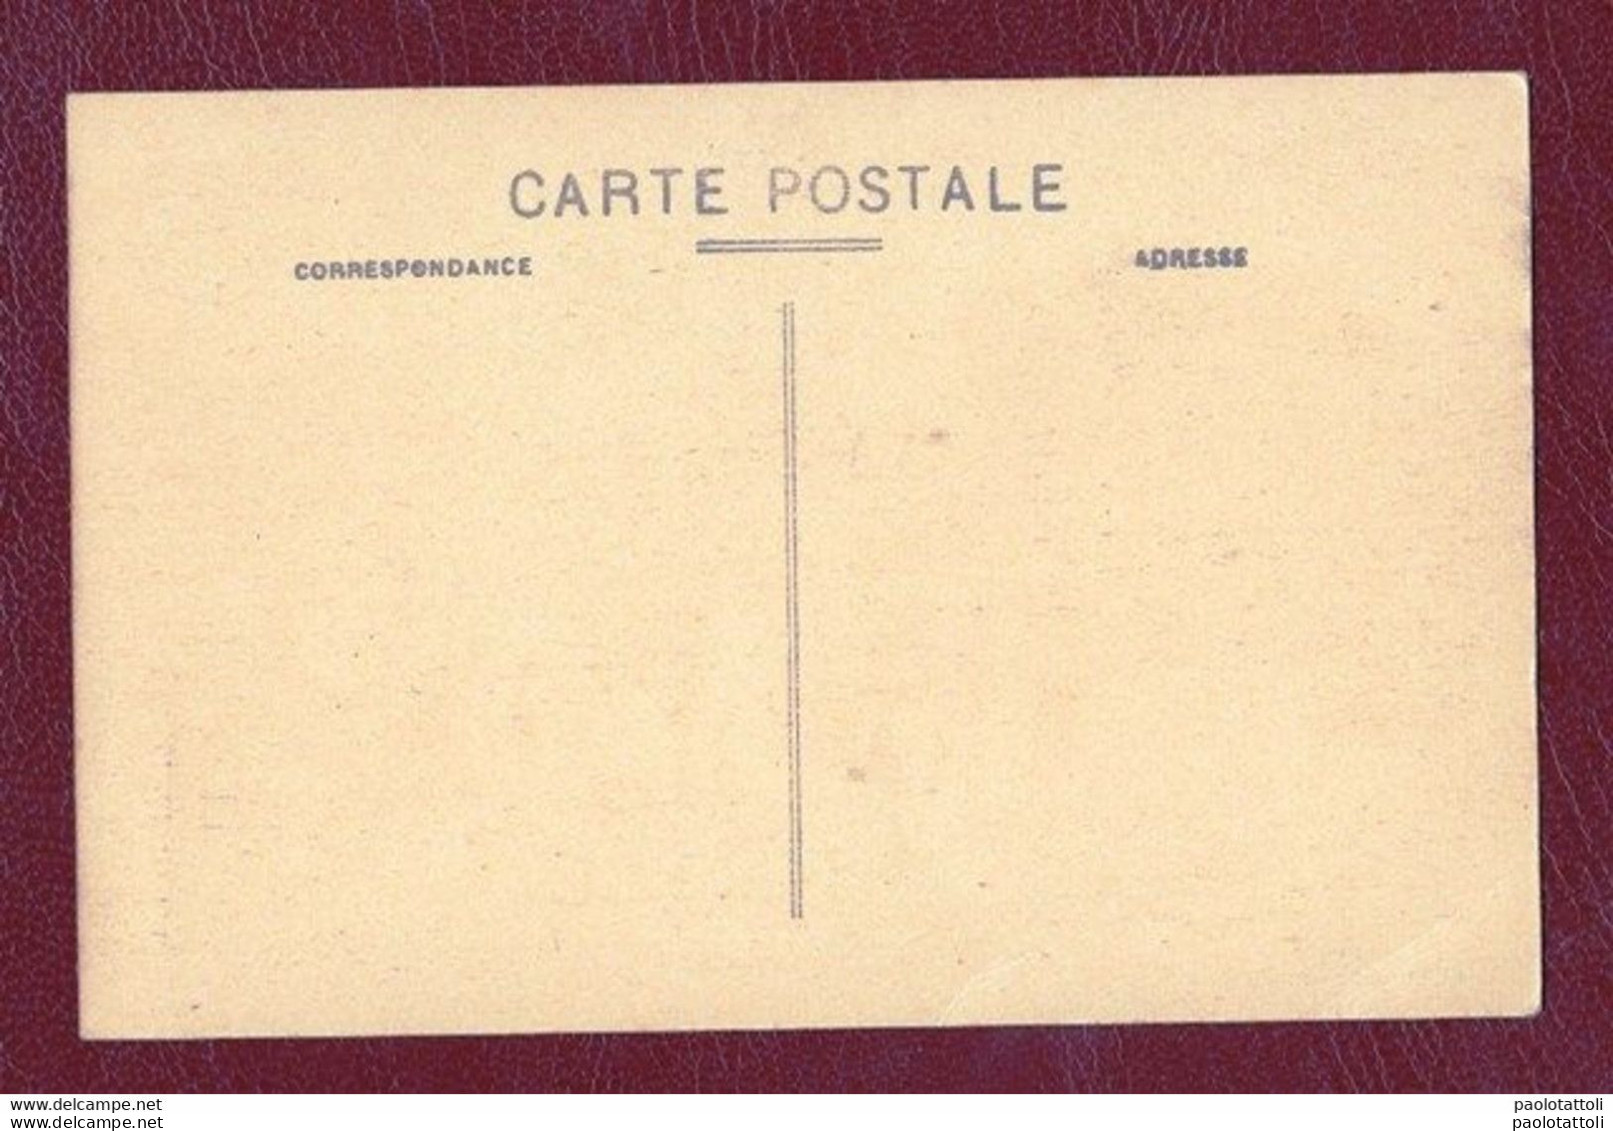 Dakar, Place Protet. New, Verso Divide, Small Size Post Card. Ed. A.Albaret No 57 - Sénégal